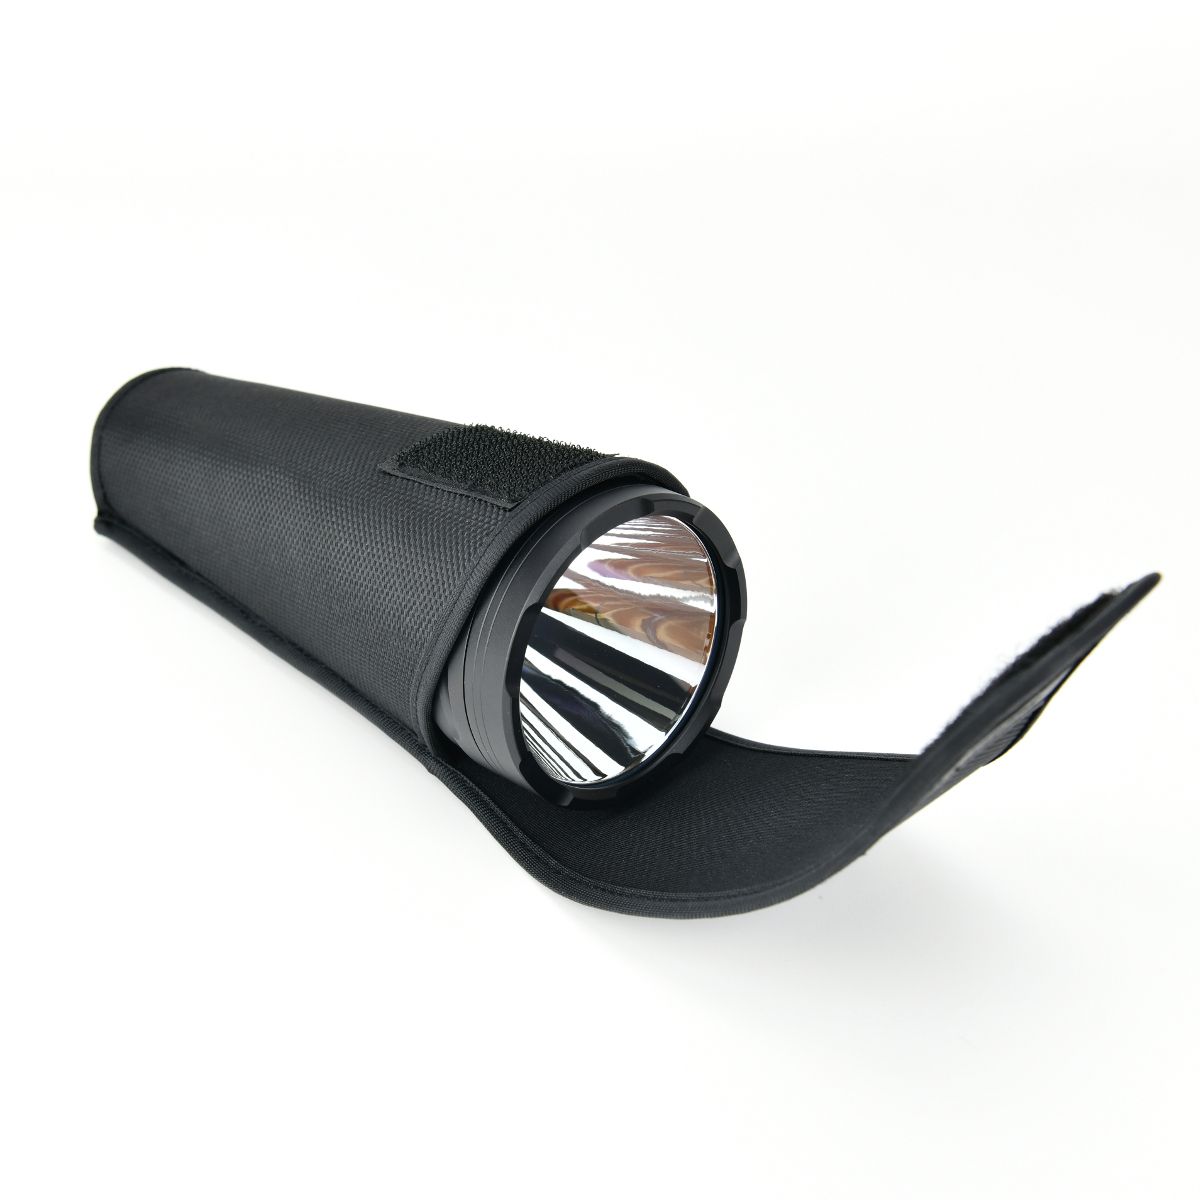 Astroluxreg-Flashlight-Holster-For-Astrolux-FT03-Flashlight-Protected-Bag-Waist-Bag-1544877